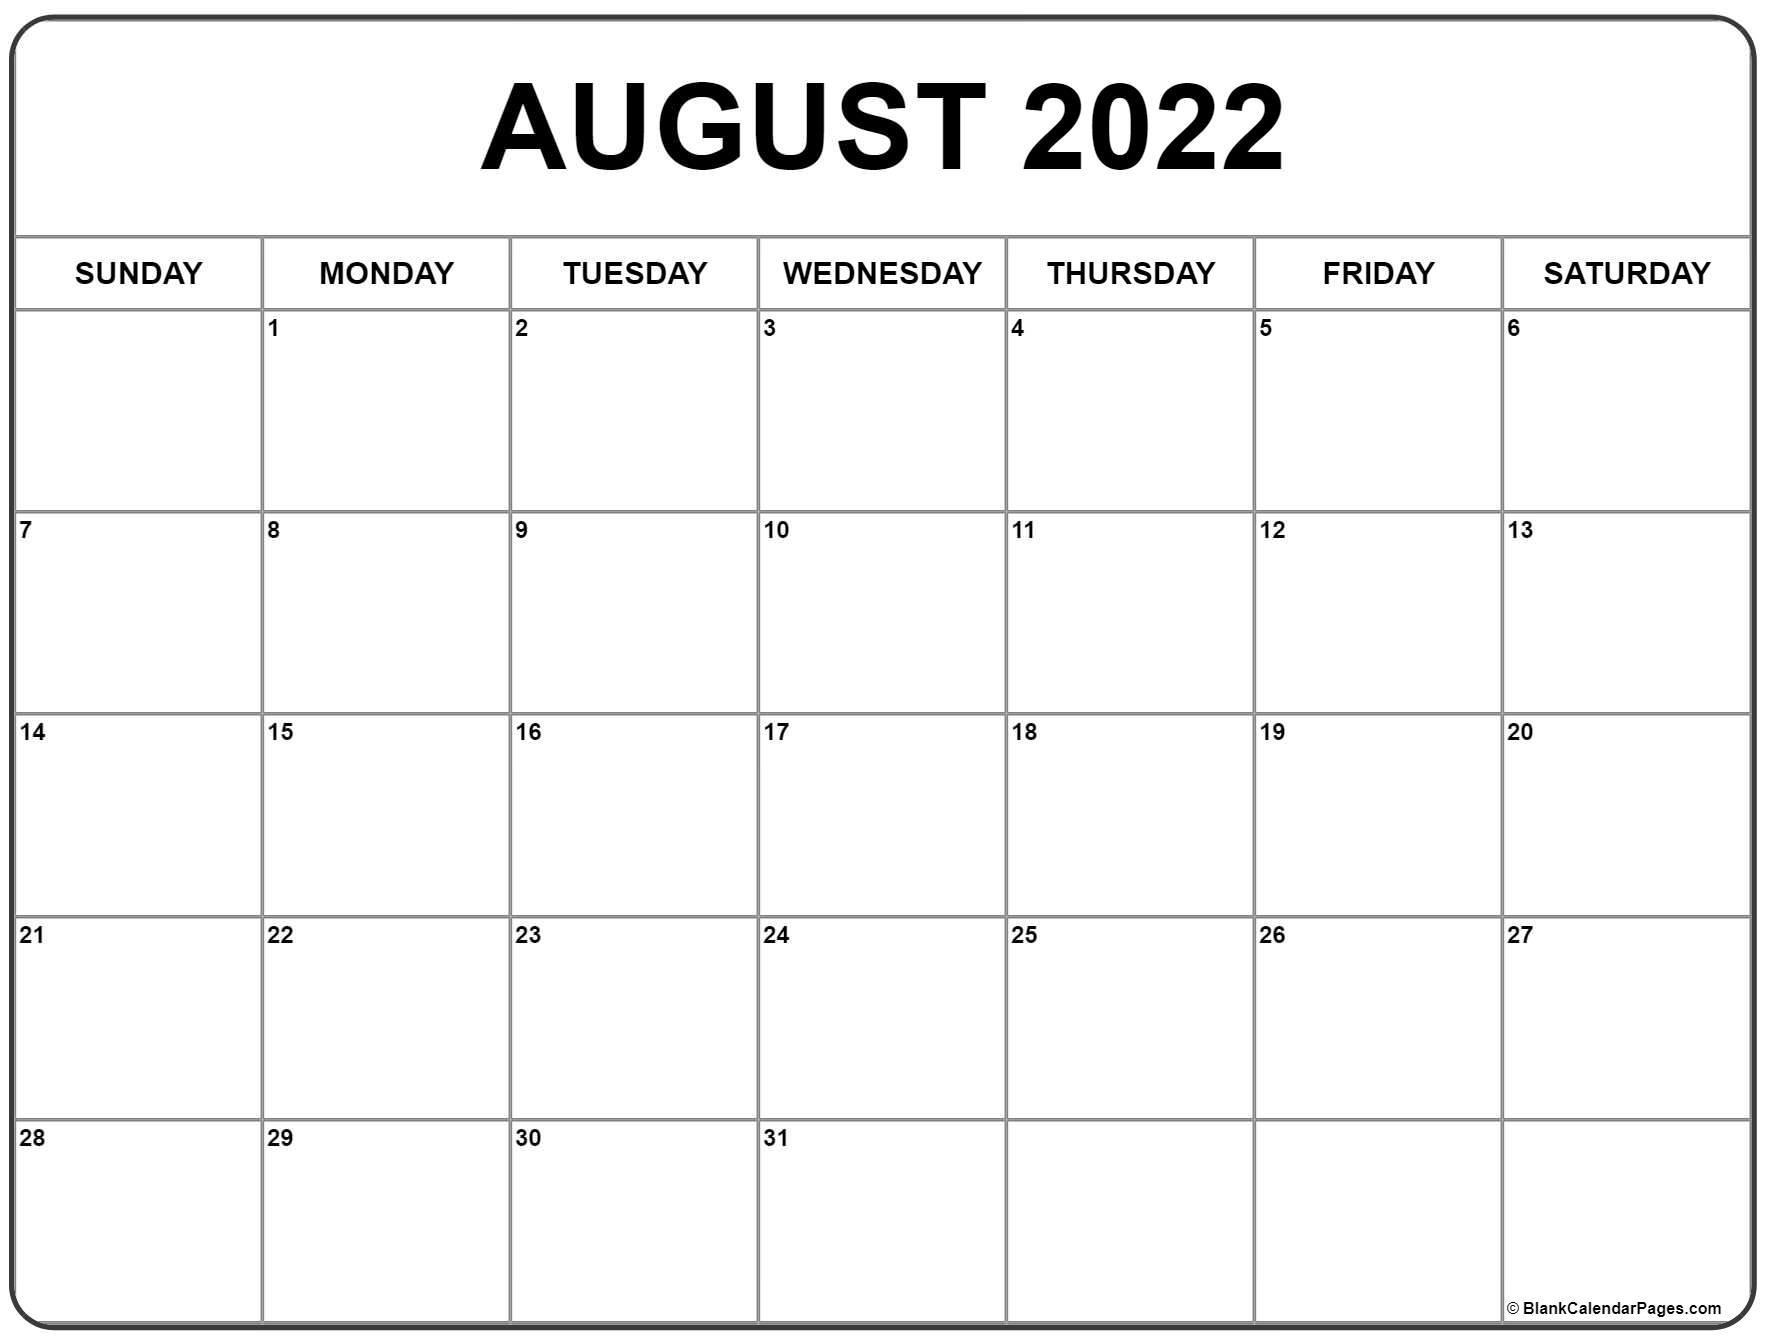 August 2022 Calendar | Free Printable Calendar Templates regarding August 2022 Printable Calendar